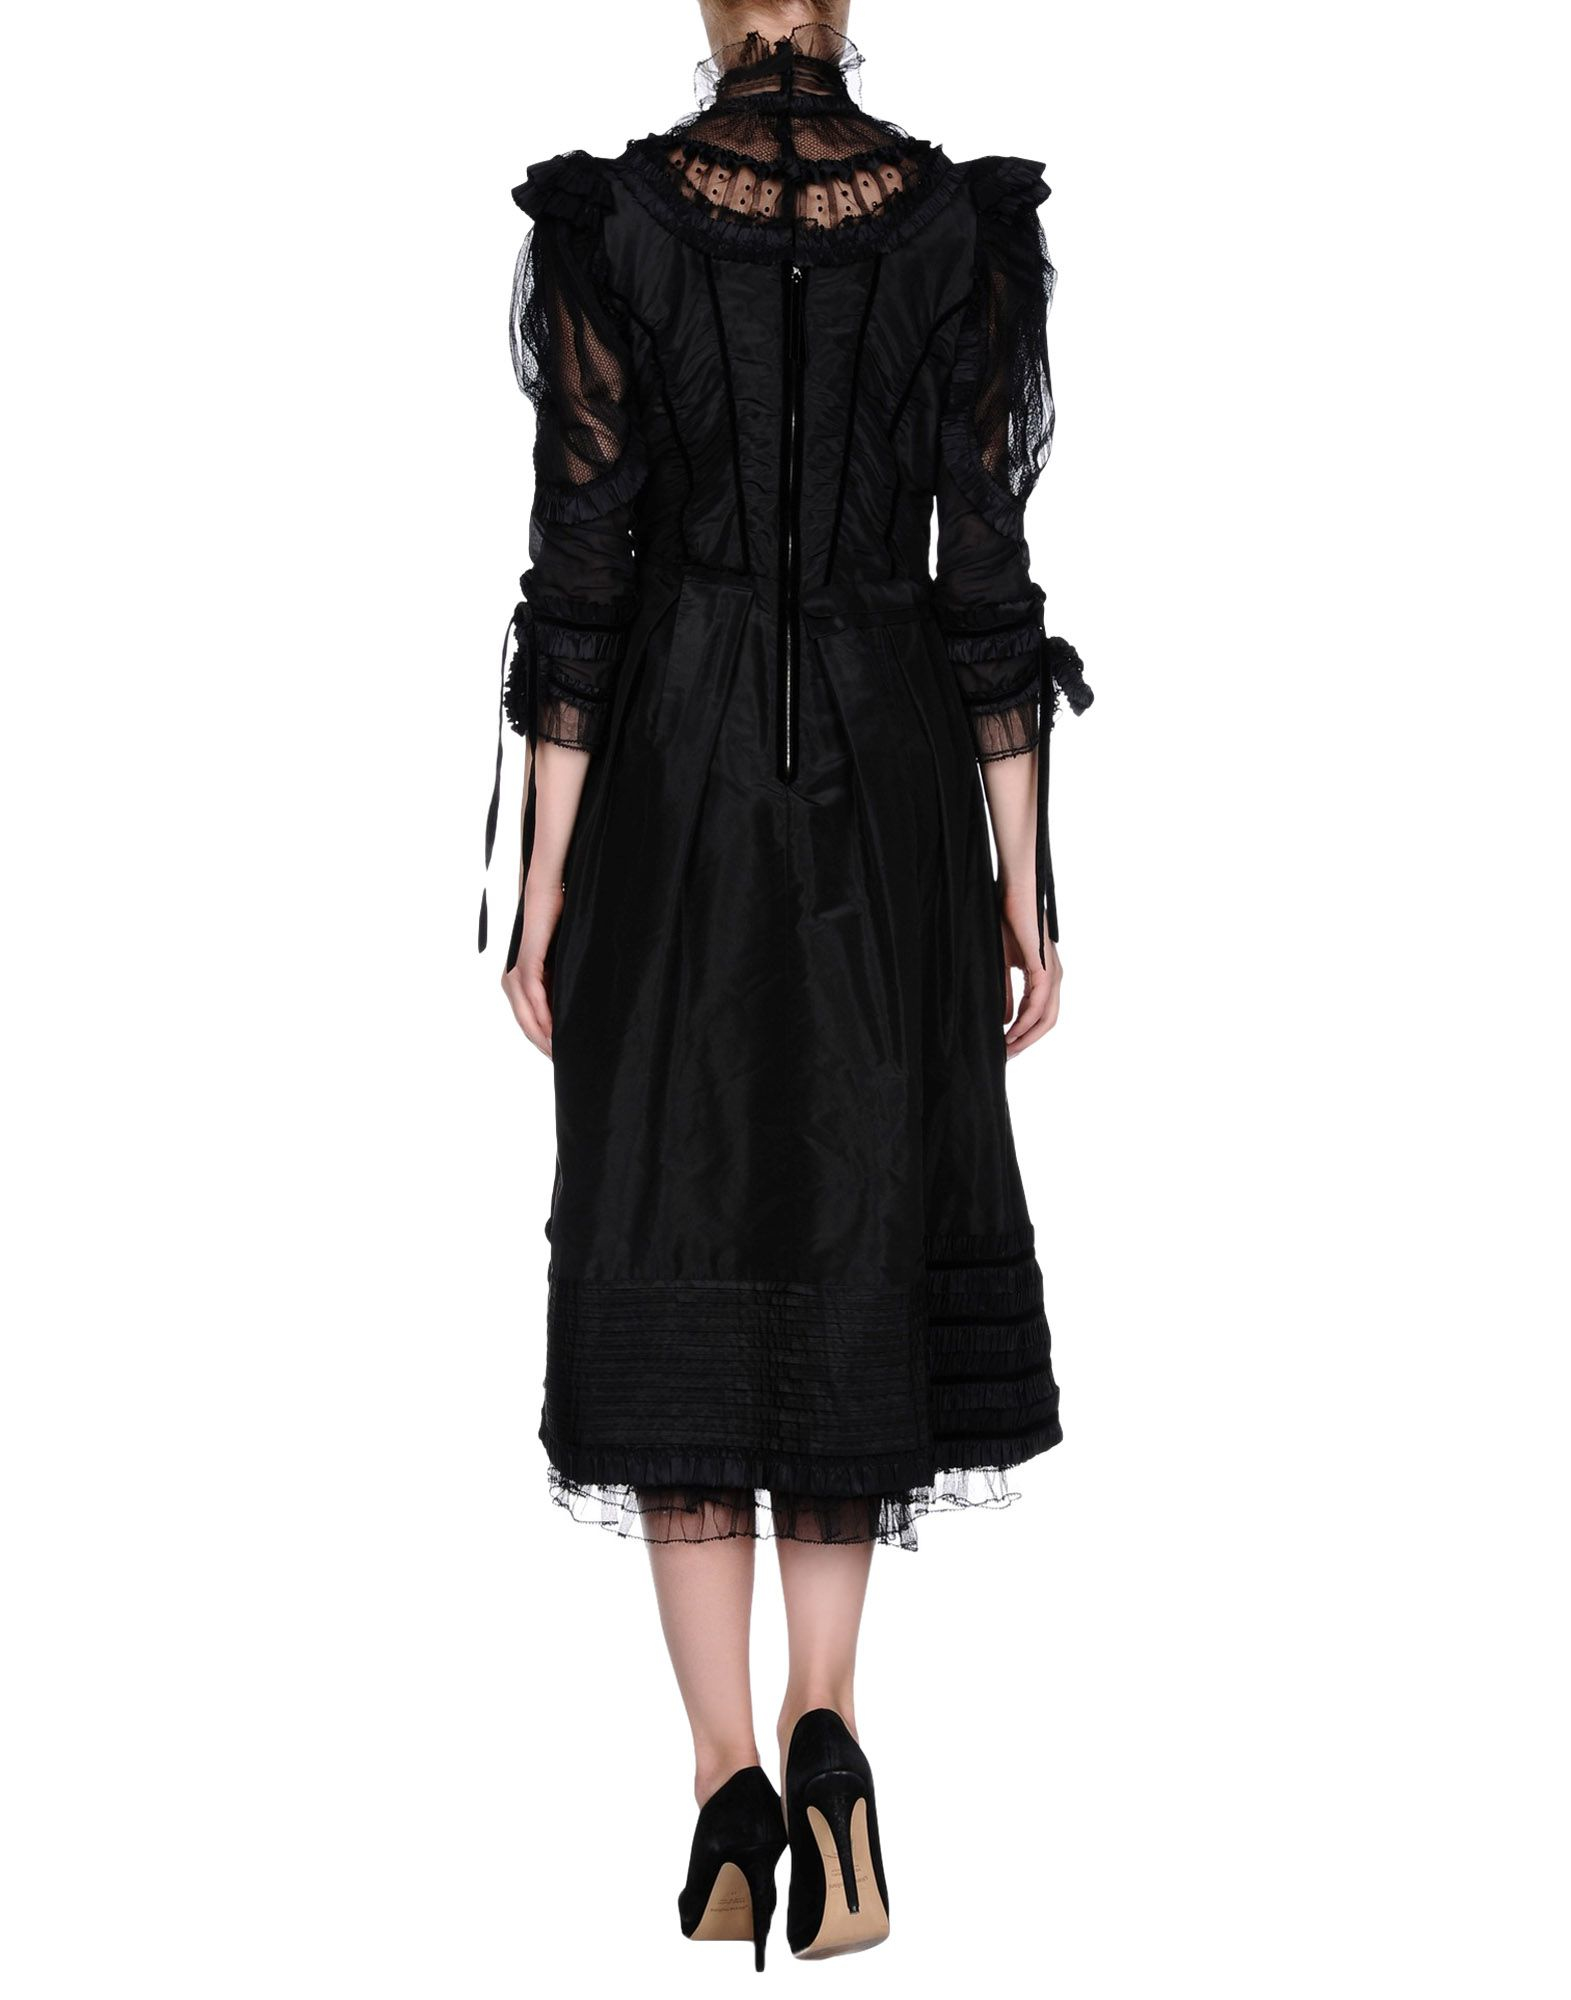 Lyst - Marc Jacobs Long Sleeve Dress in Black